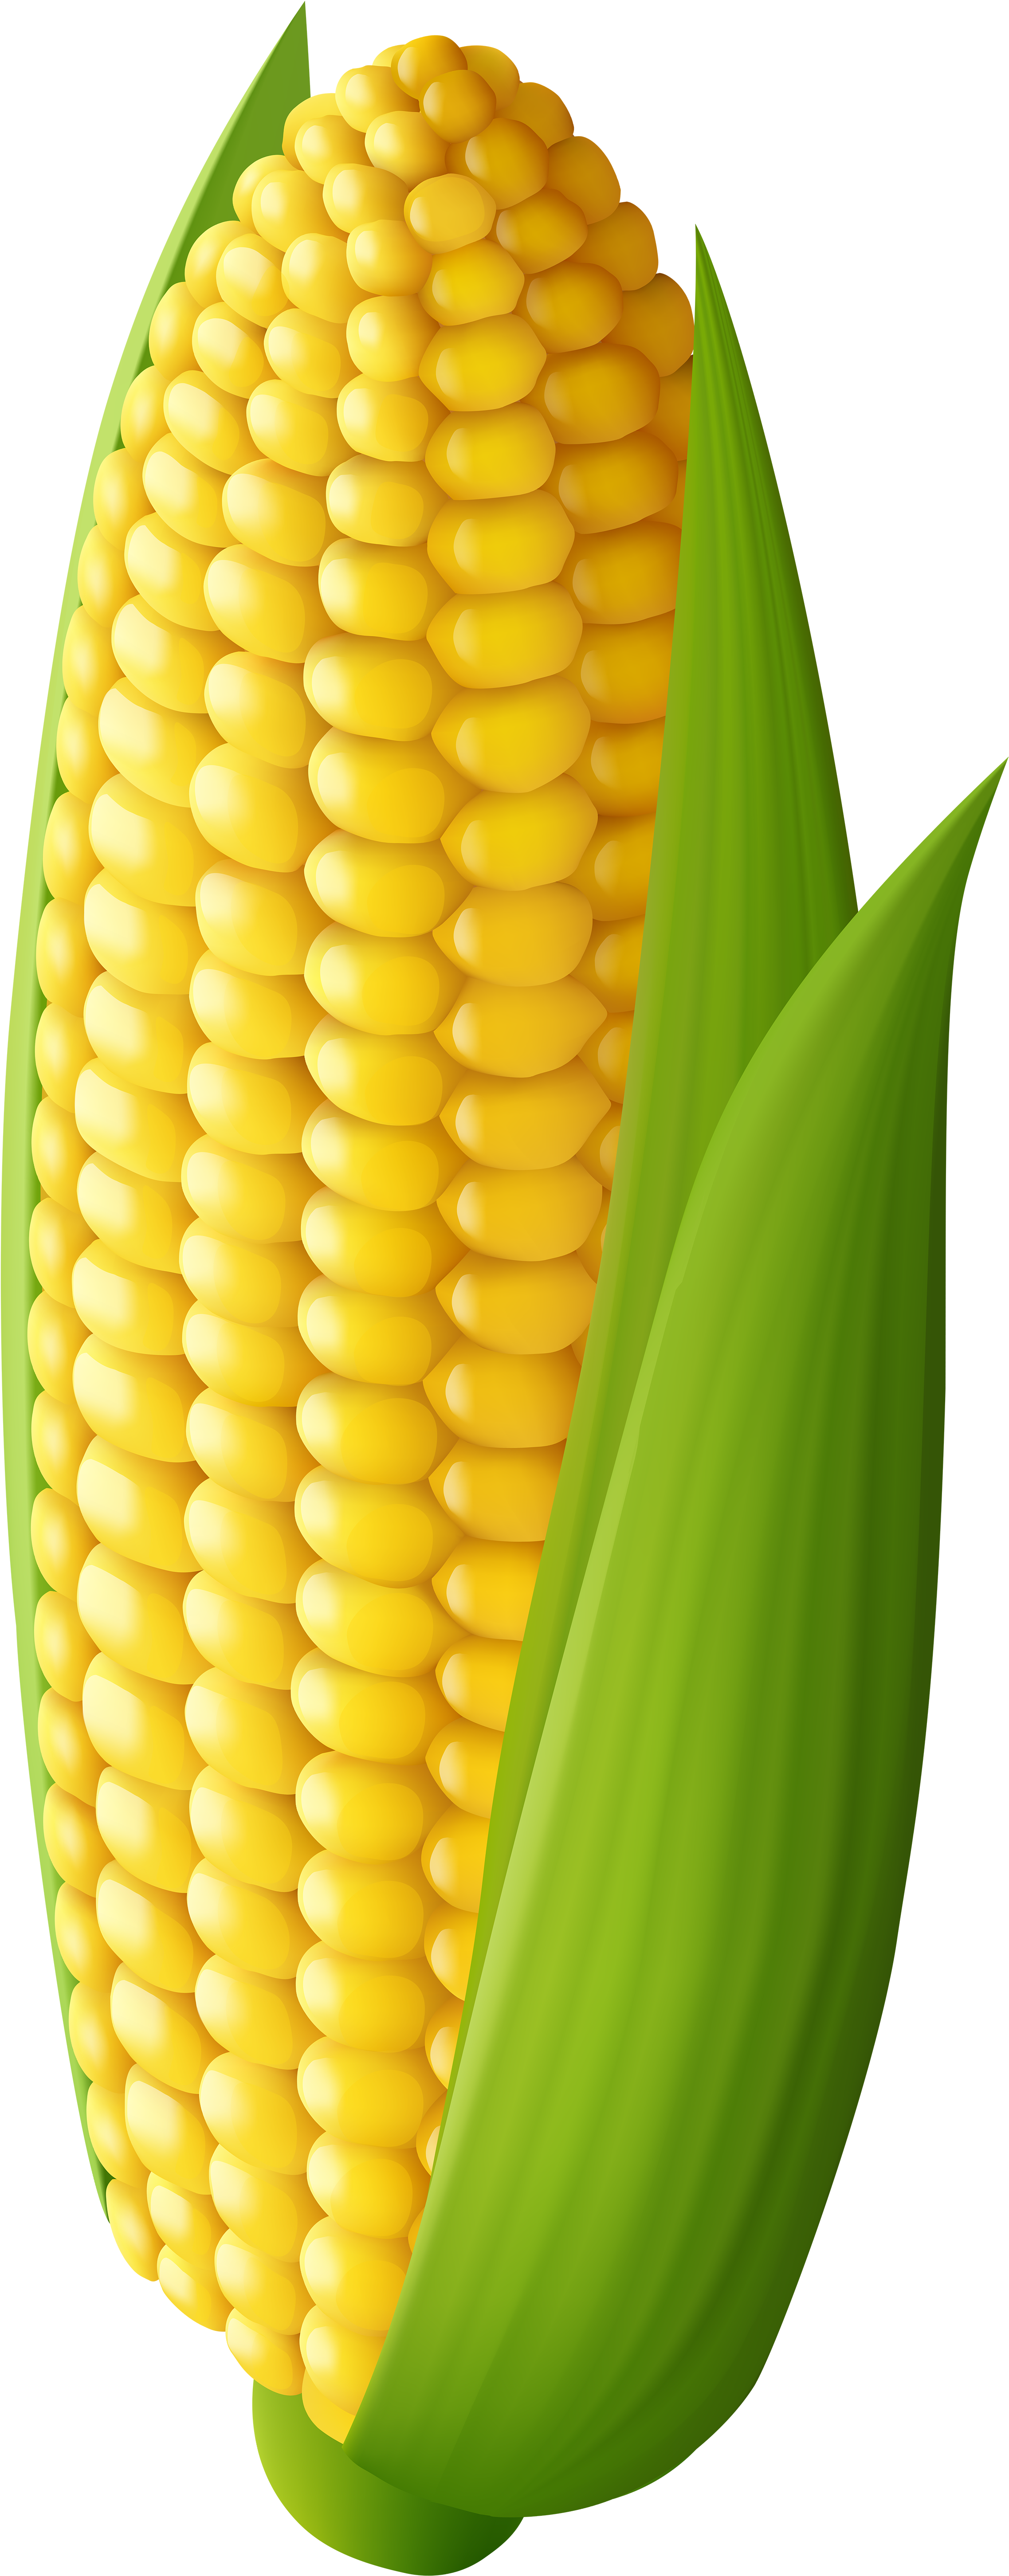 Download Corn Transparent Png Clip Art Image Transparent Background Corn Clipart Png Image With No Background Pngkey Com